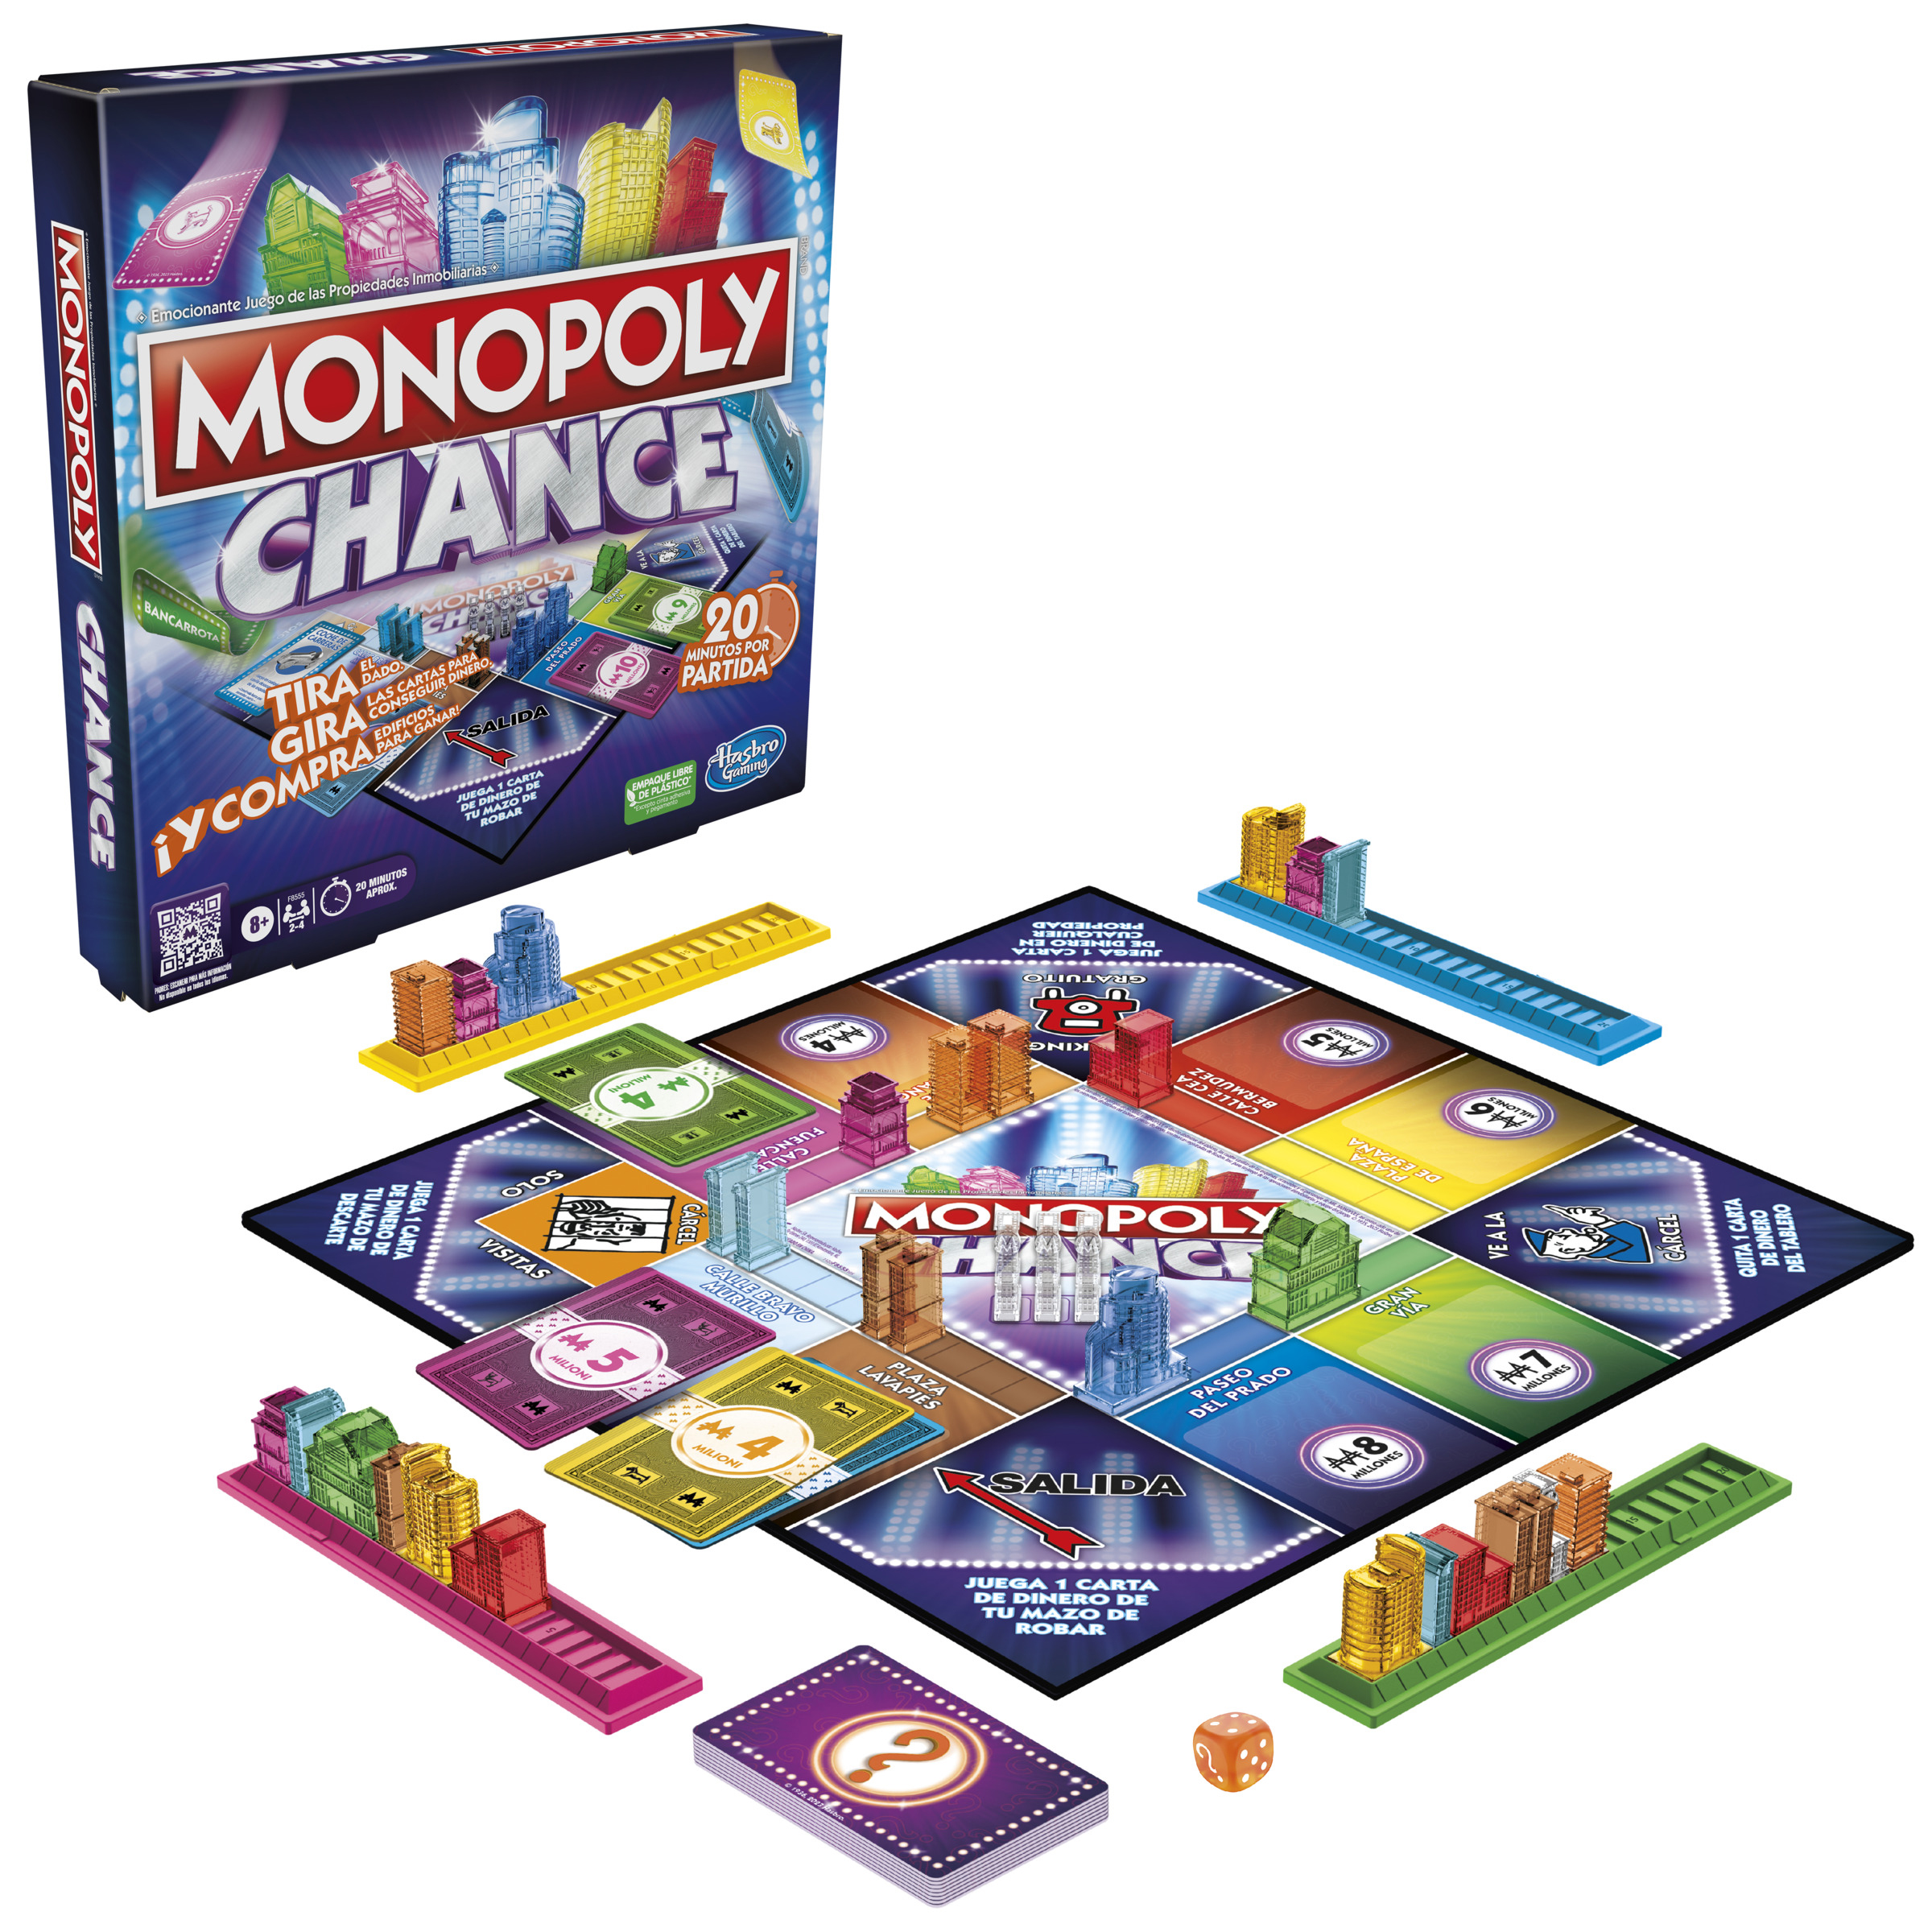 monopoly chance (hasbro - f8555105)